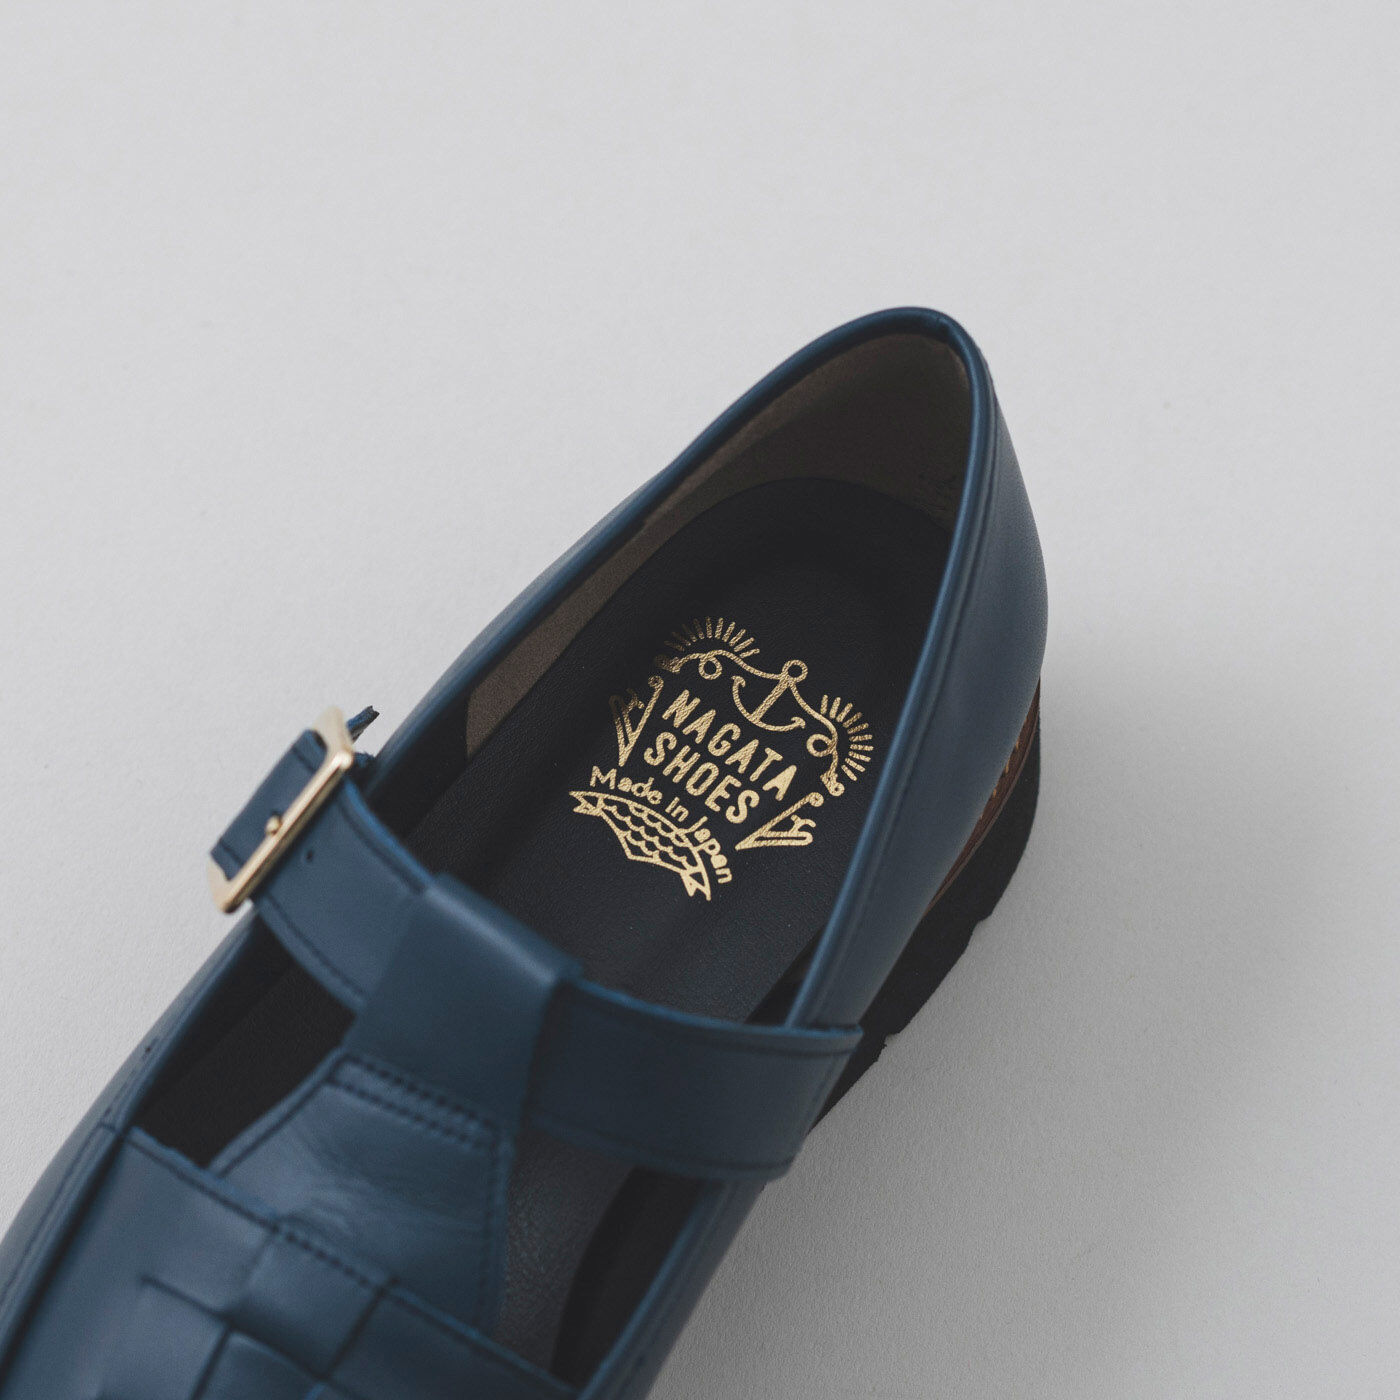 ＆Stories|靴デザイナーの理想で仕上げた 職人本革のTストラップローファー〈ネイビー〉|中敷きには、カッコイイ金色の箔押し。